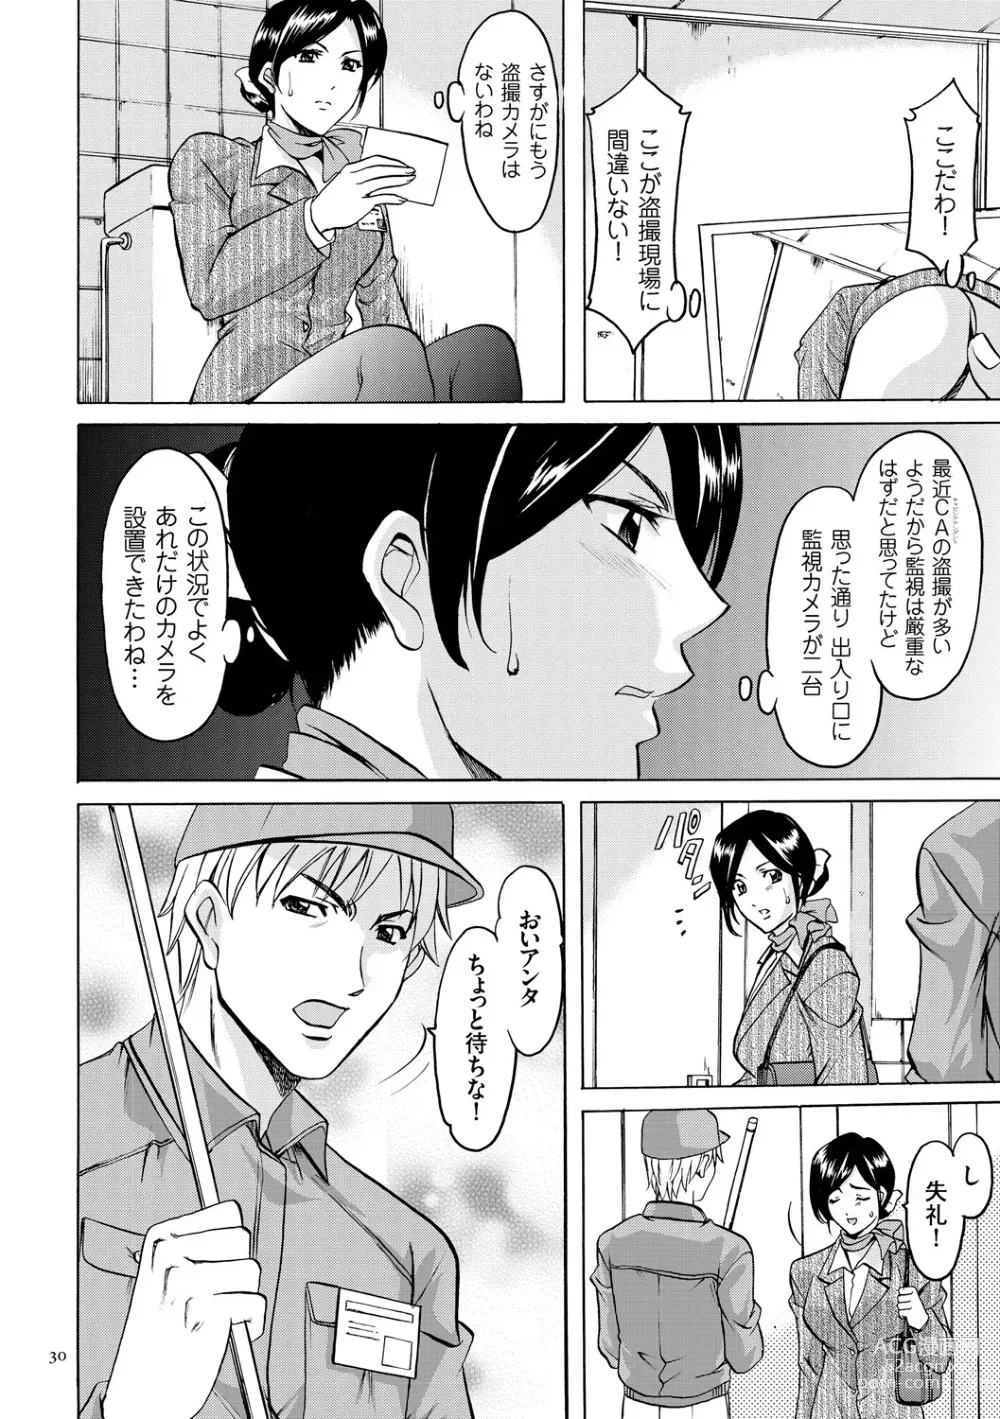 Page 30 of manga Sennyu Tsuma Satomi Kiroku